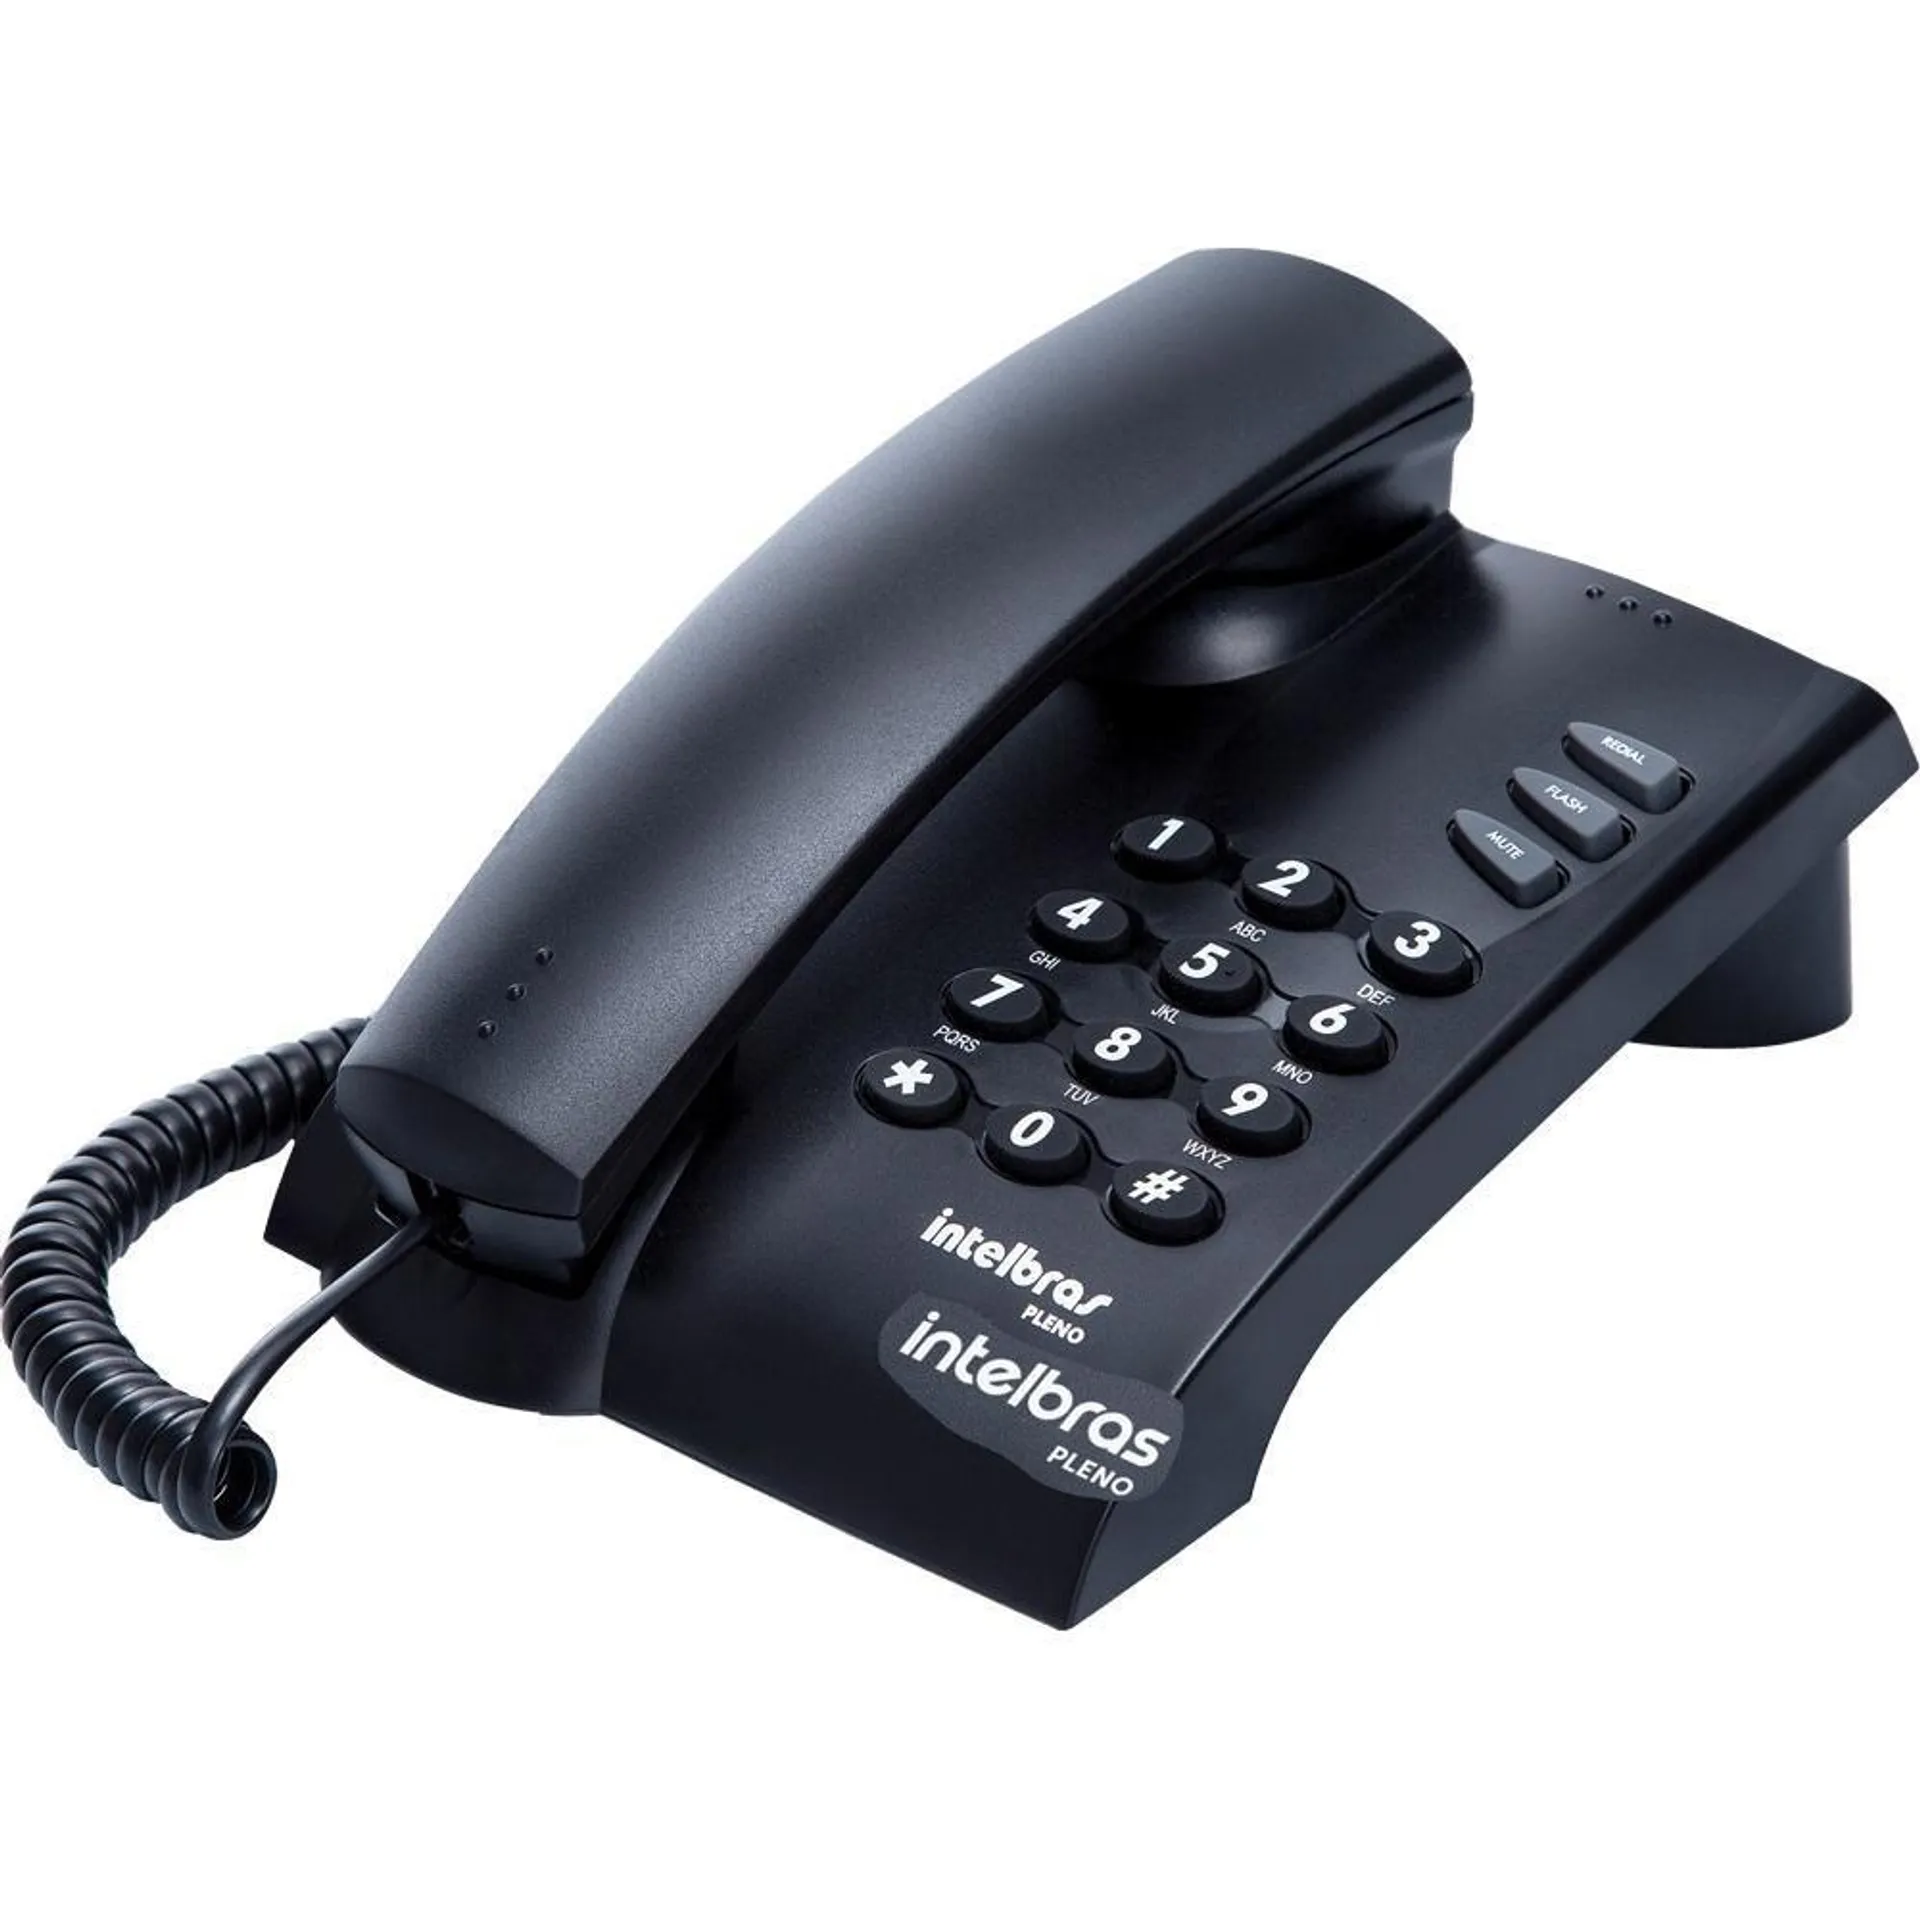 Telefone com fio Pleno preto, Modelo 4080051, INTELBRAS